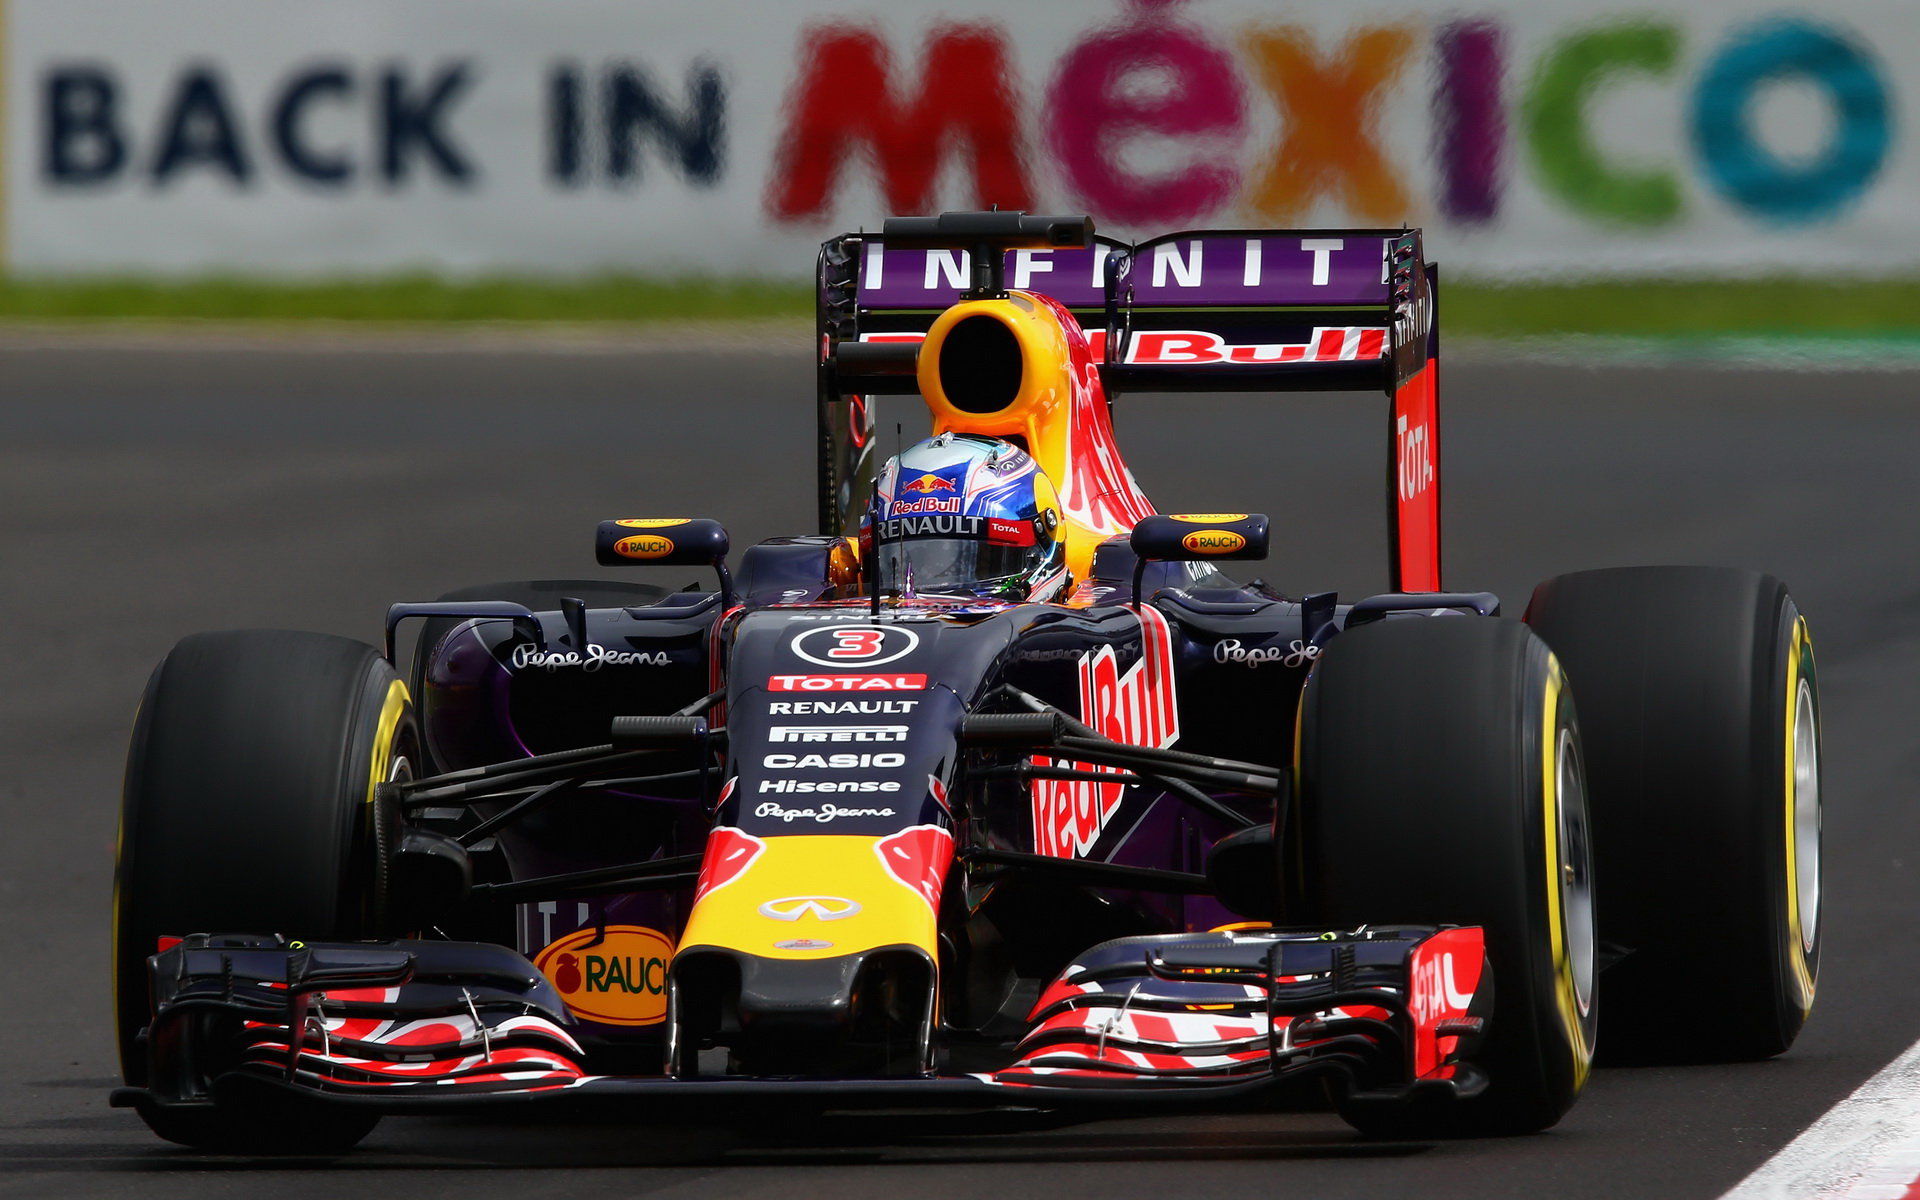 Daniel Ricciardo v Mexiku